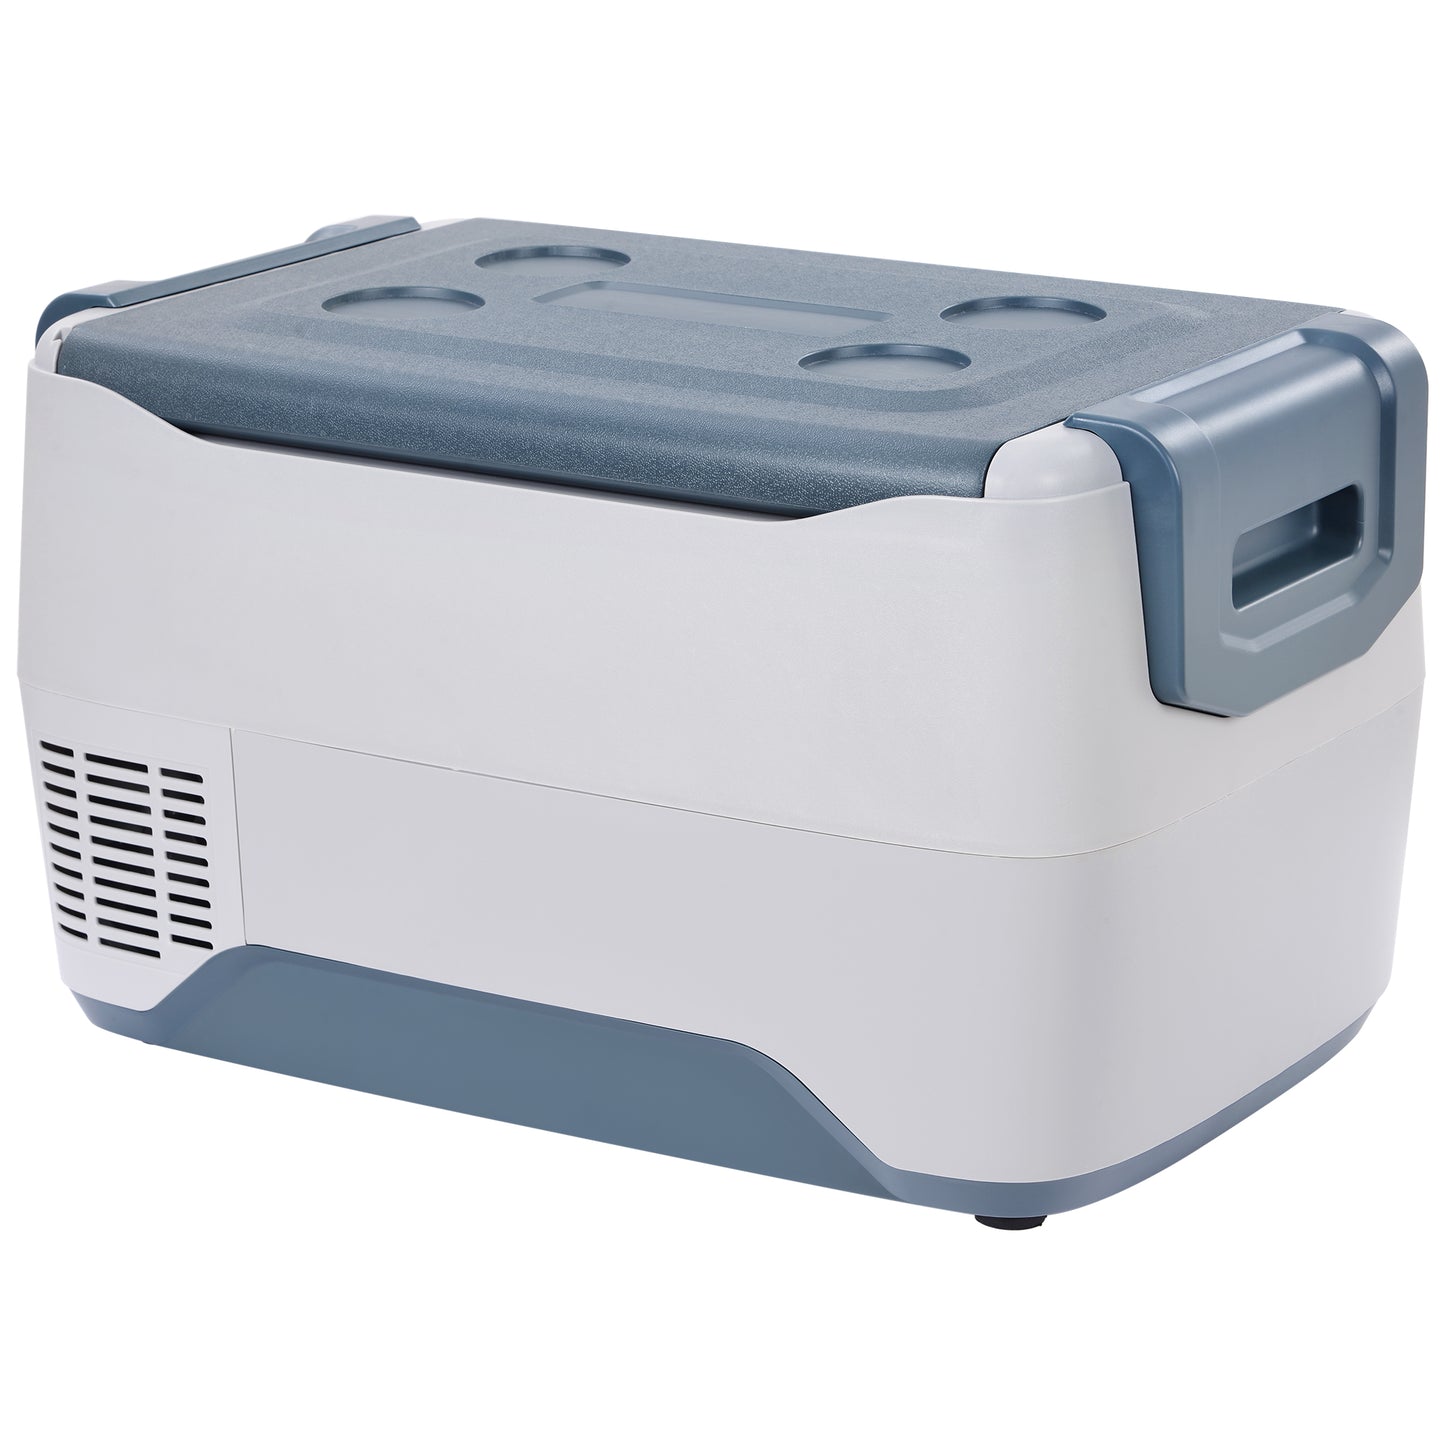 Portable Travel Freezer/Cooler with 12/24V DC